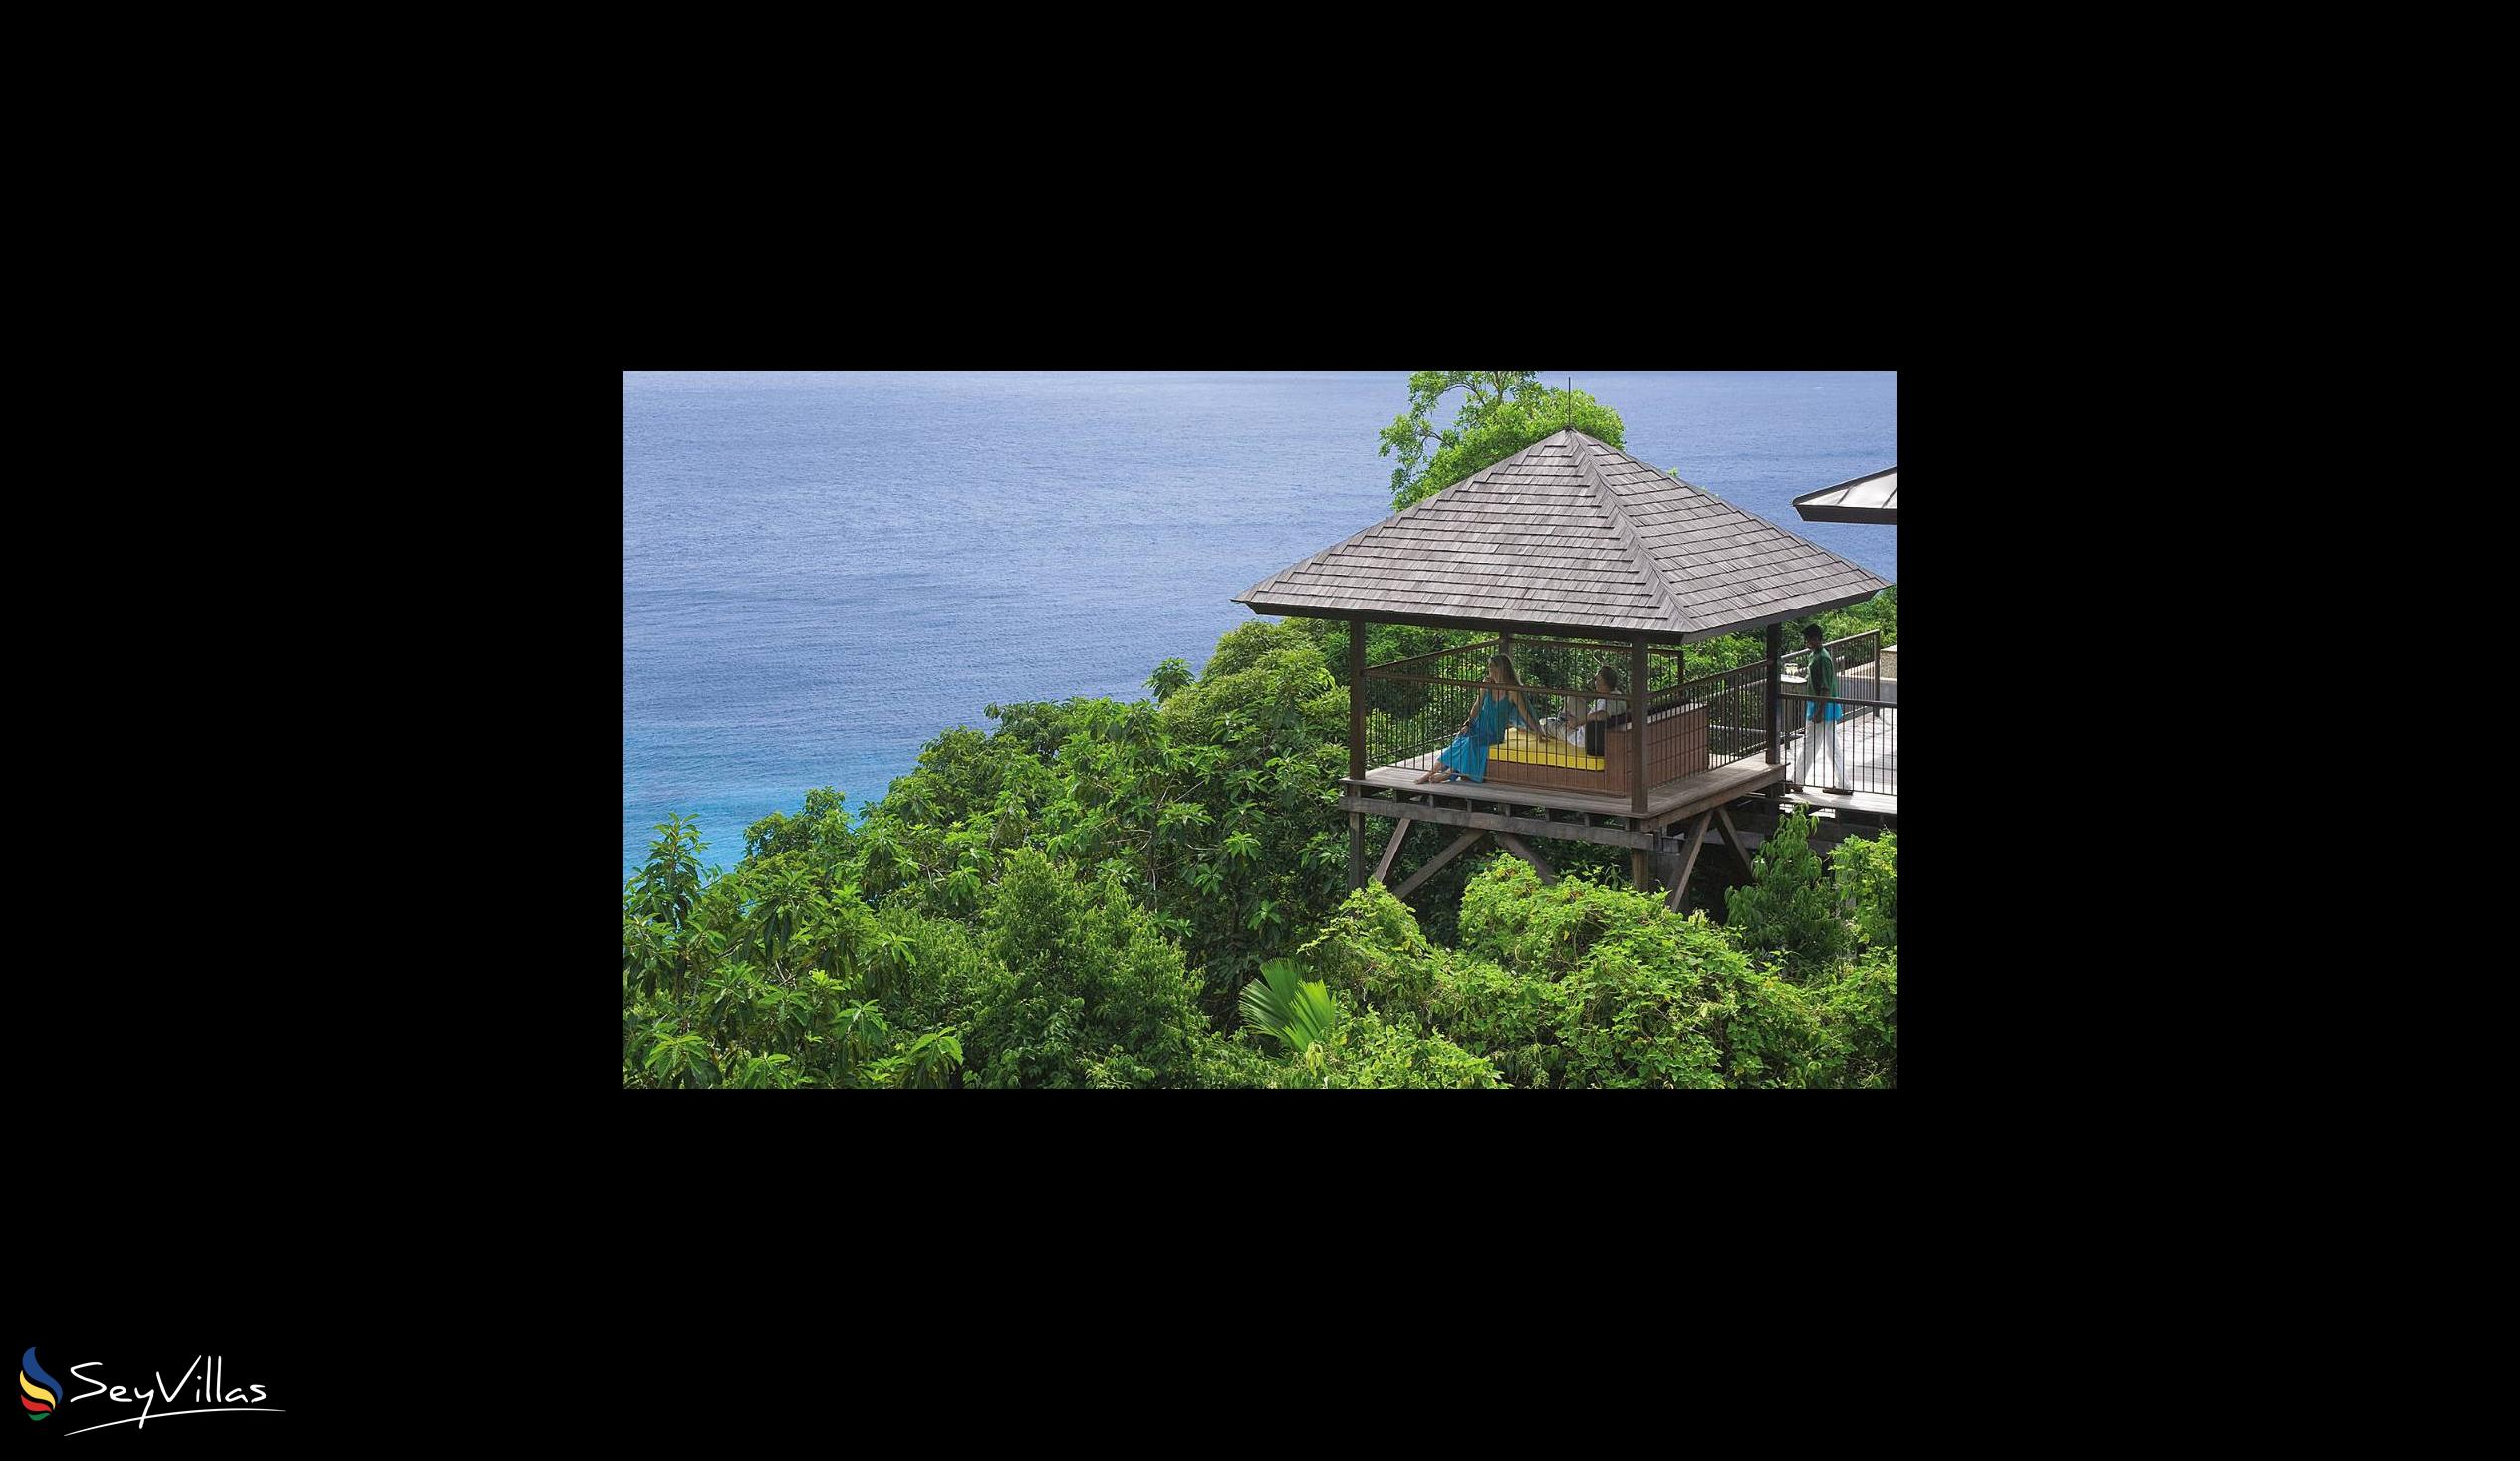 Photo 103: Four Seasons Resort - Hilltop Ocean View Villa - Mahé (Seychelles)